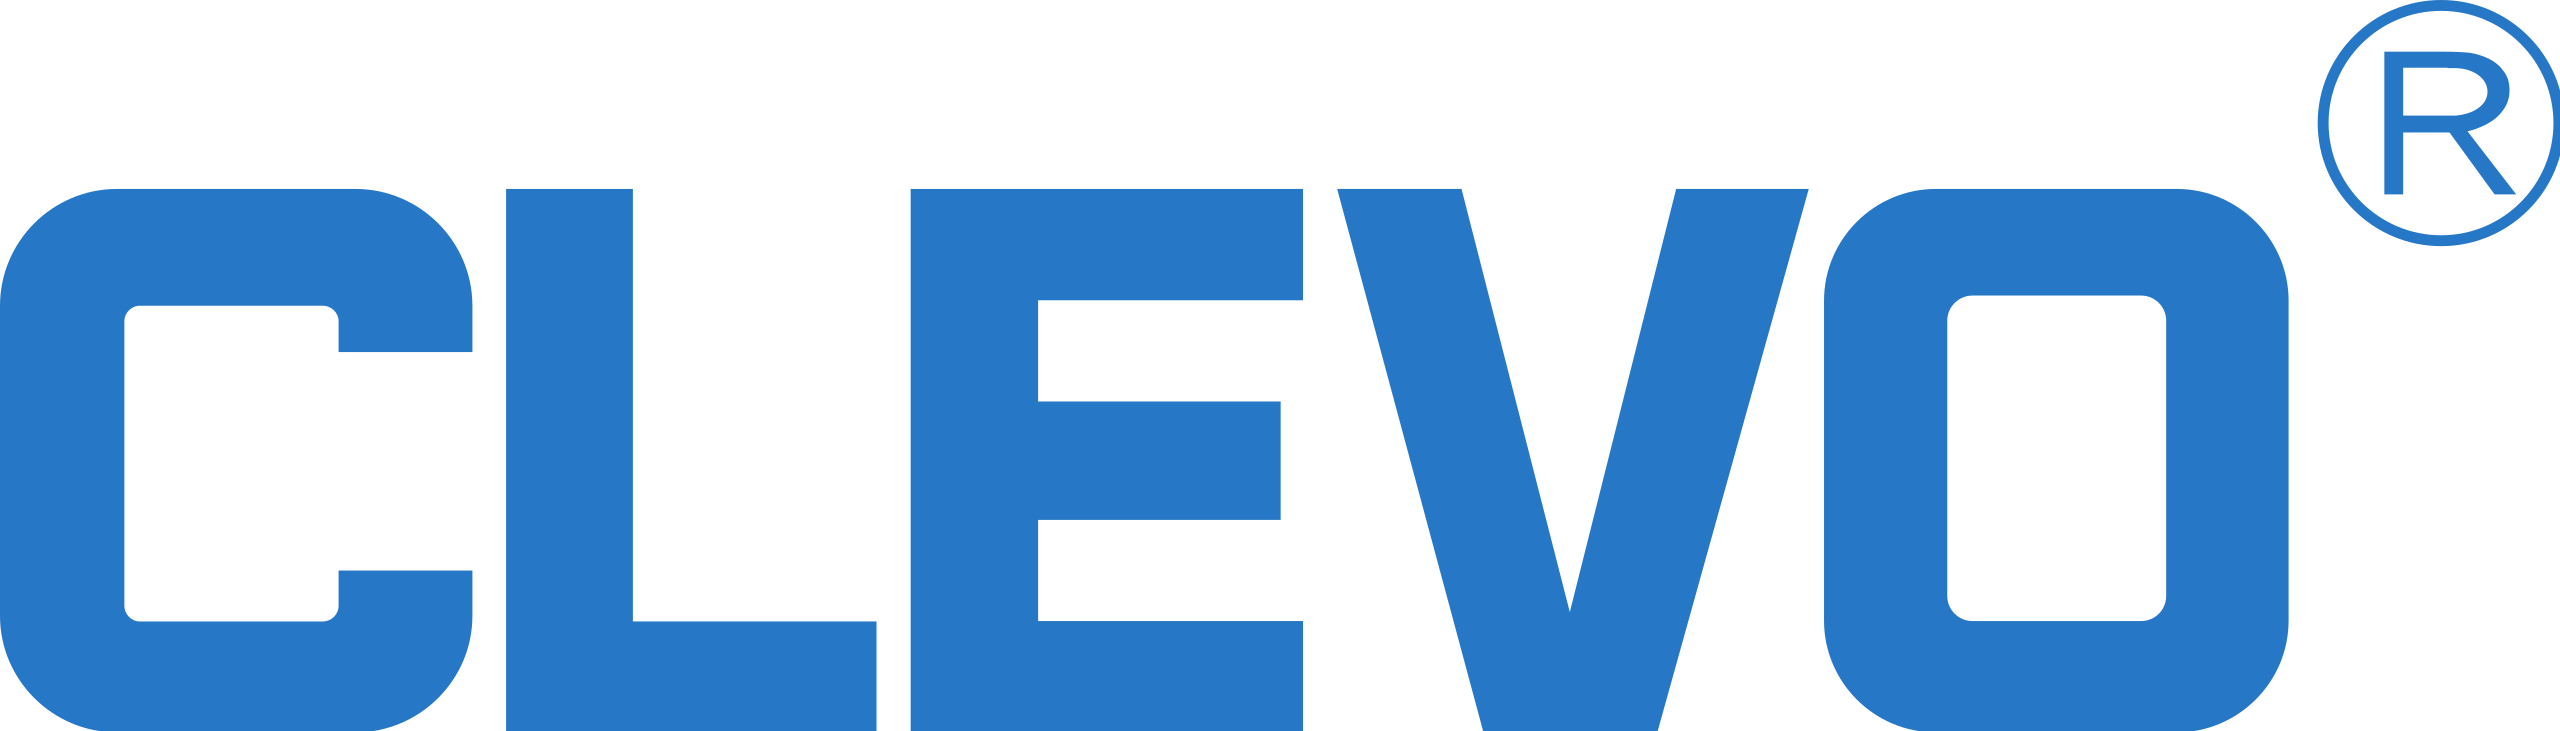 Clevo_logo.svg